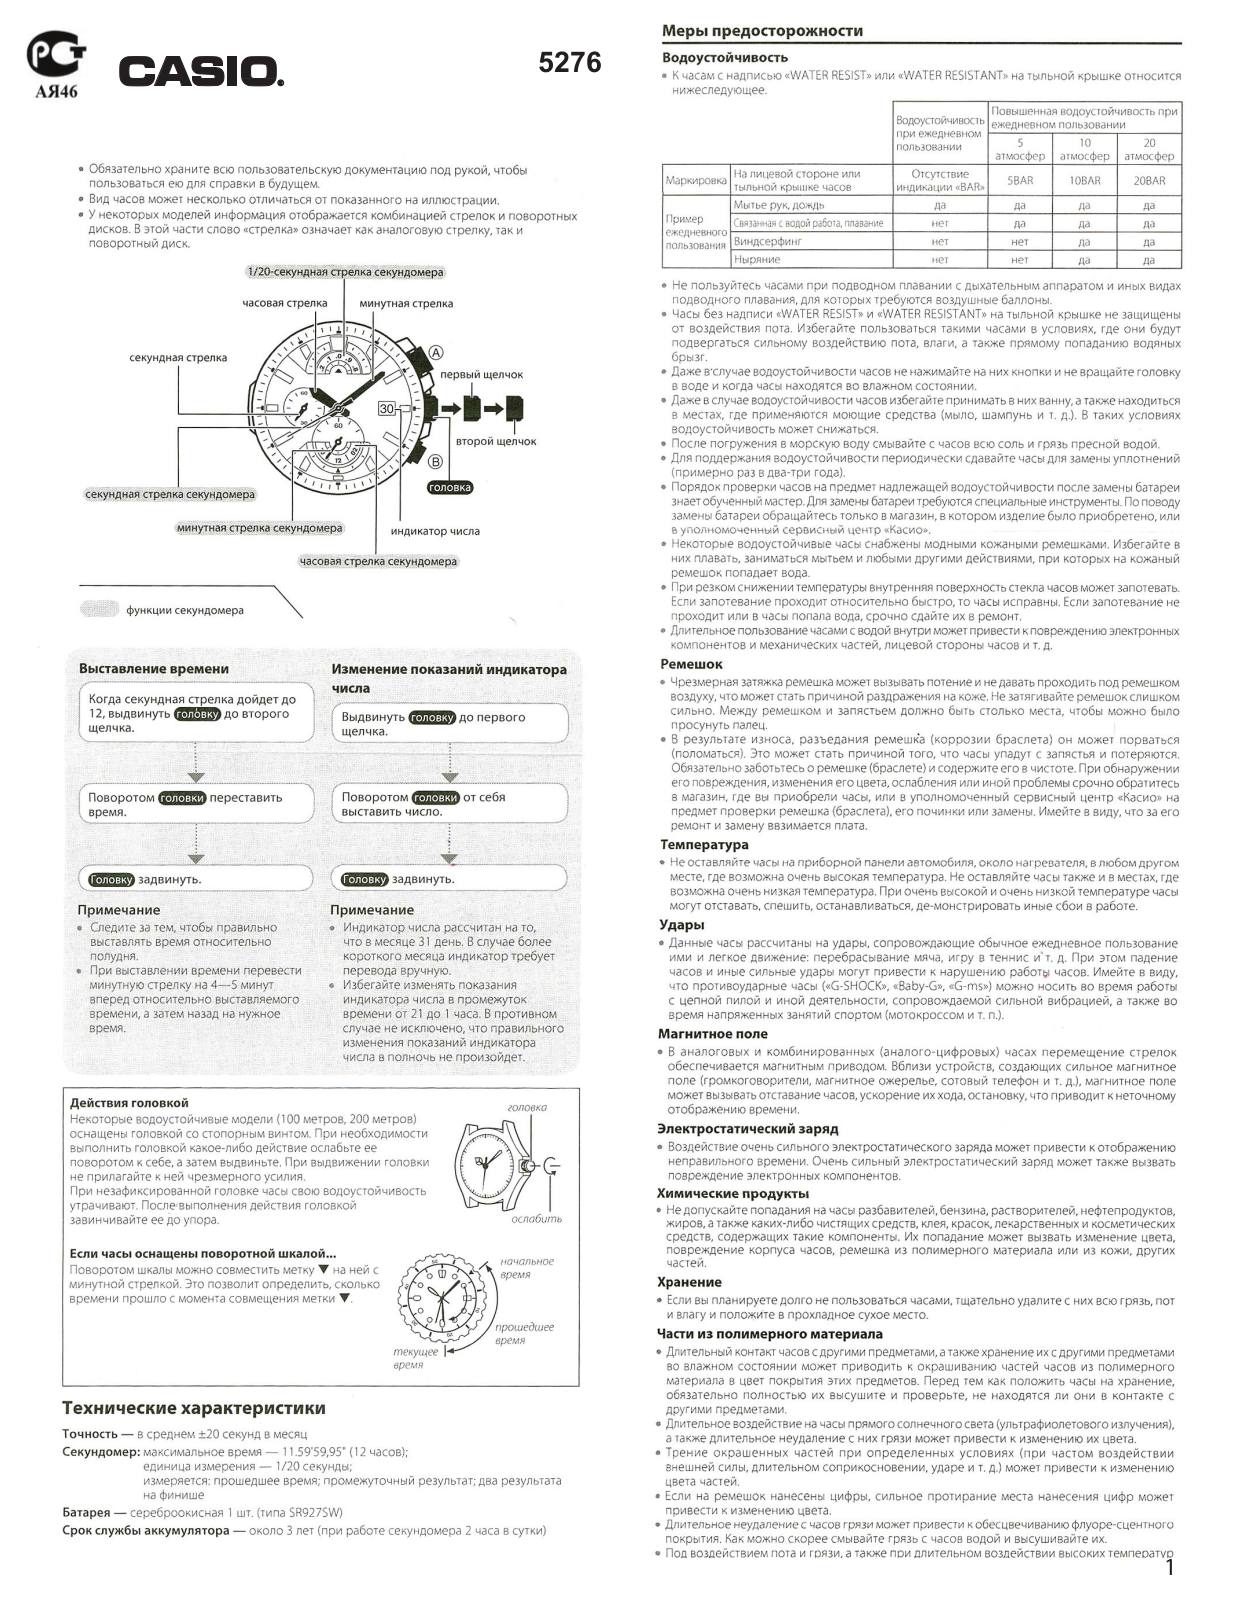 Casio EFR-523D-7A User Manual